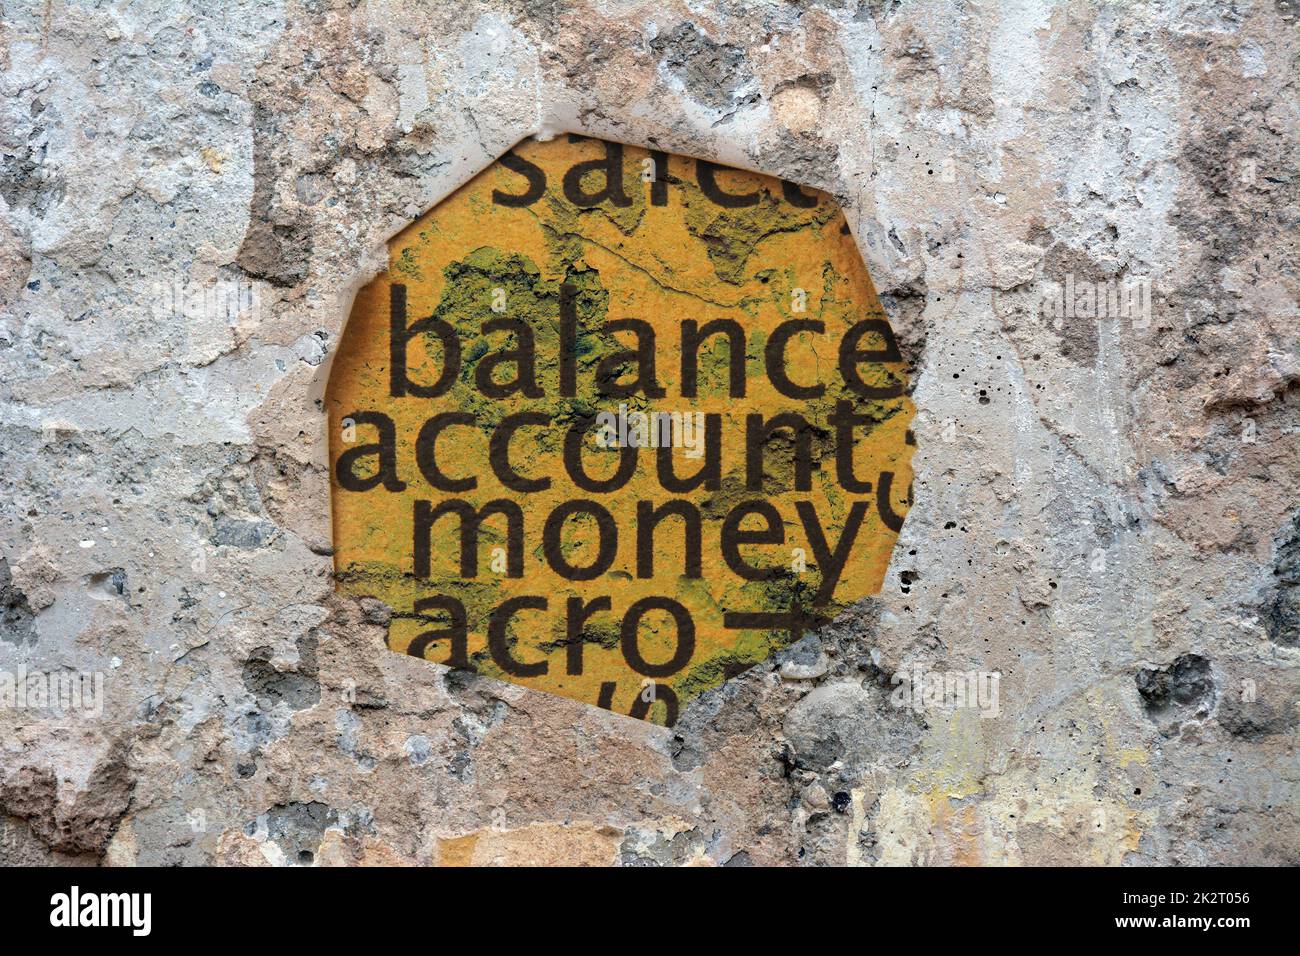 Balance account money Stock Photo